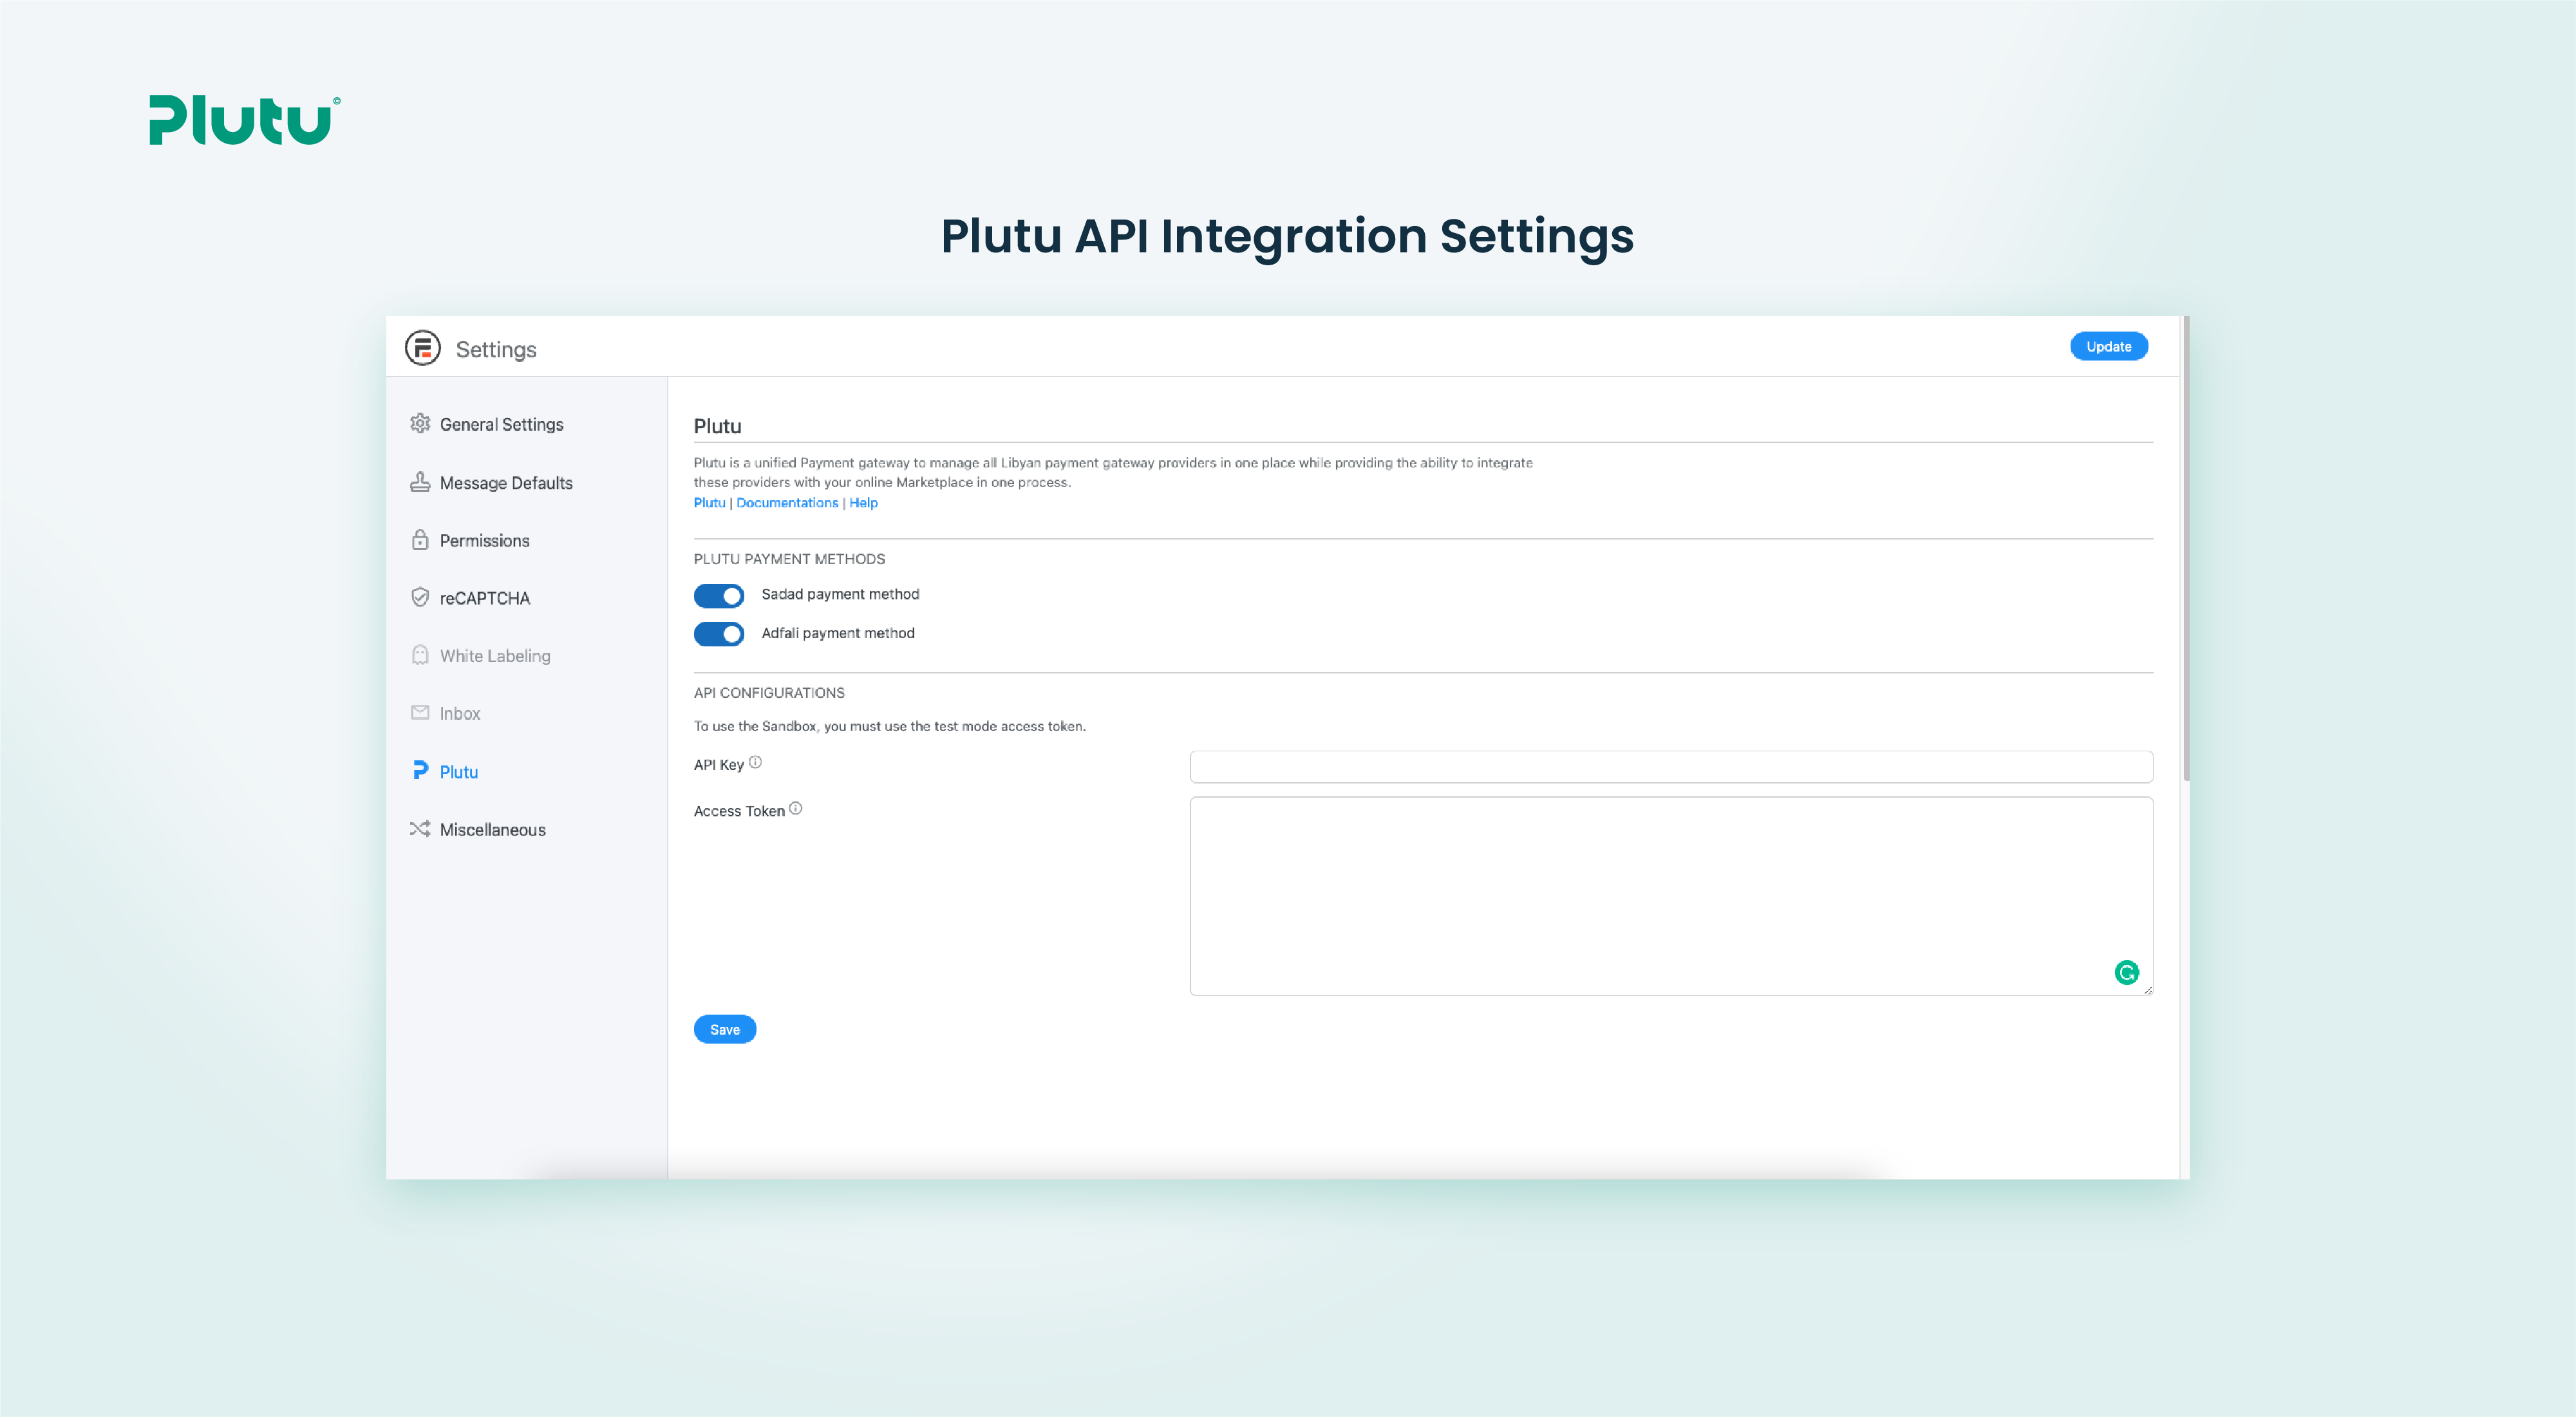 Plutu API Integration Settings